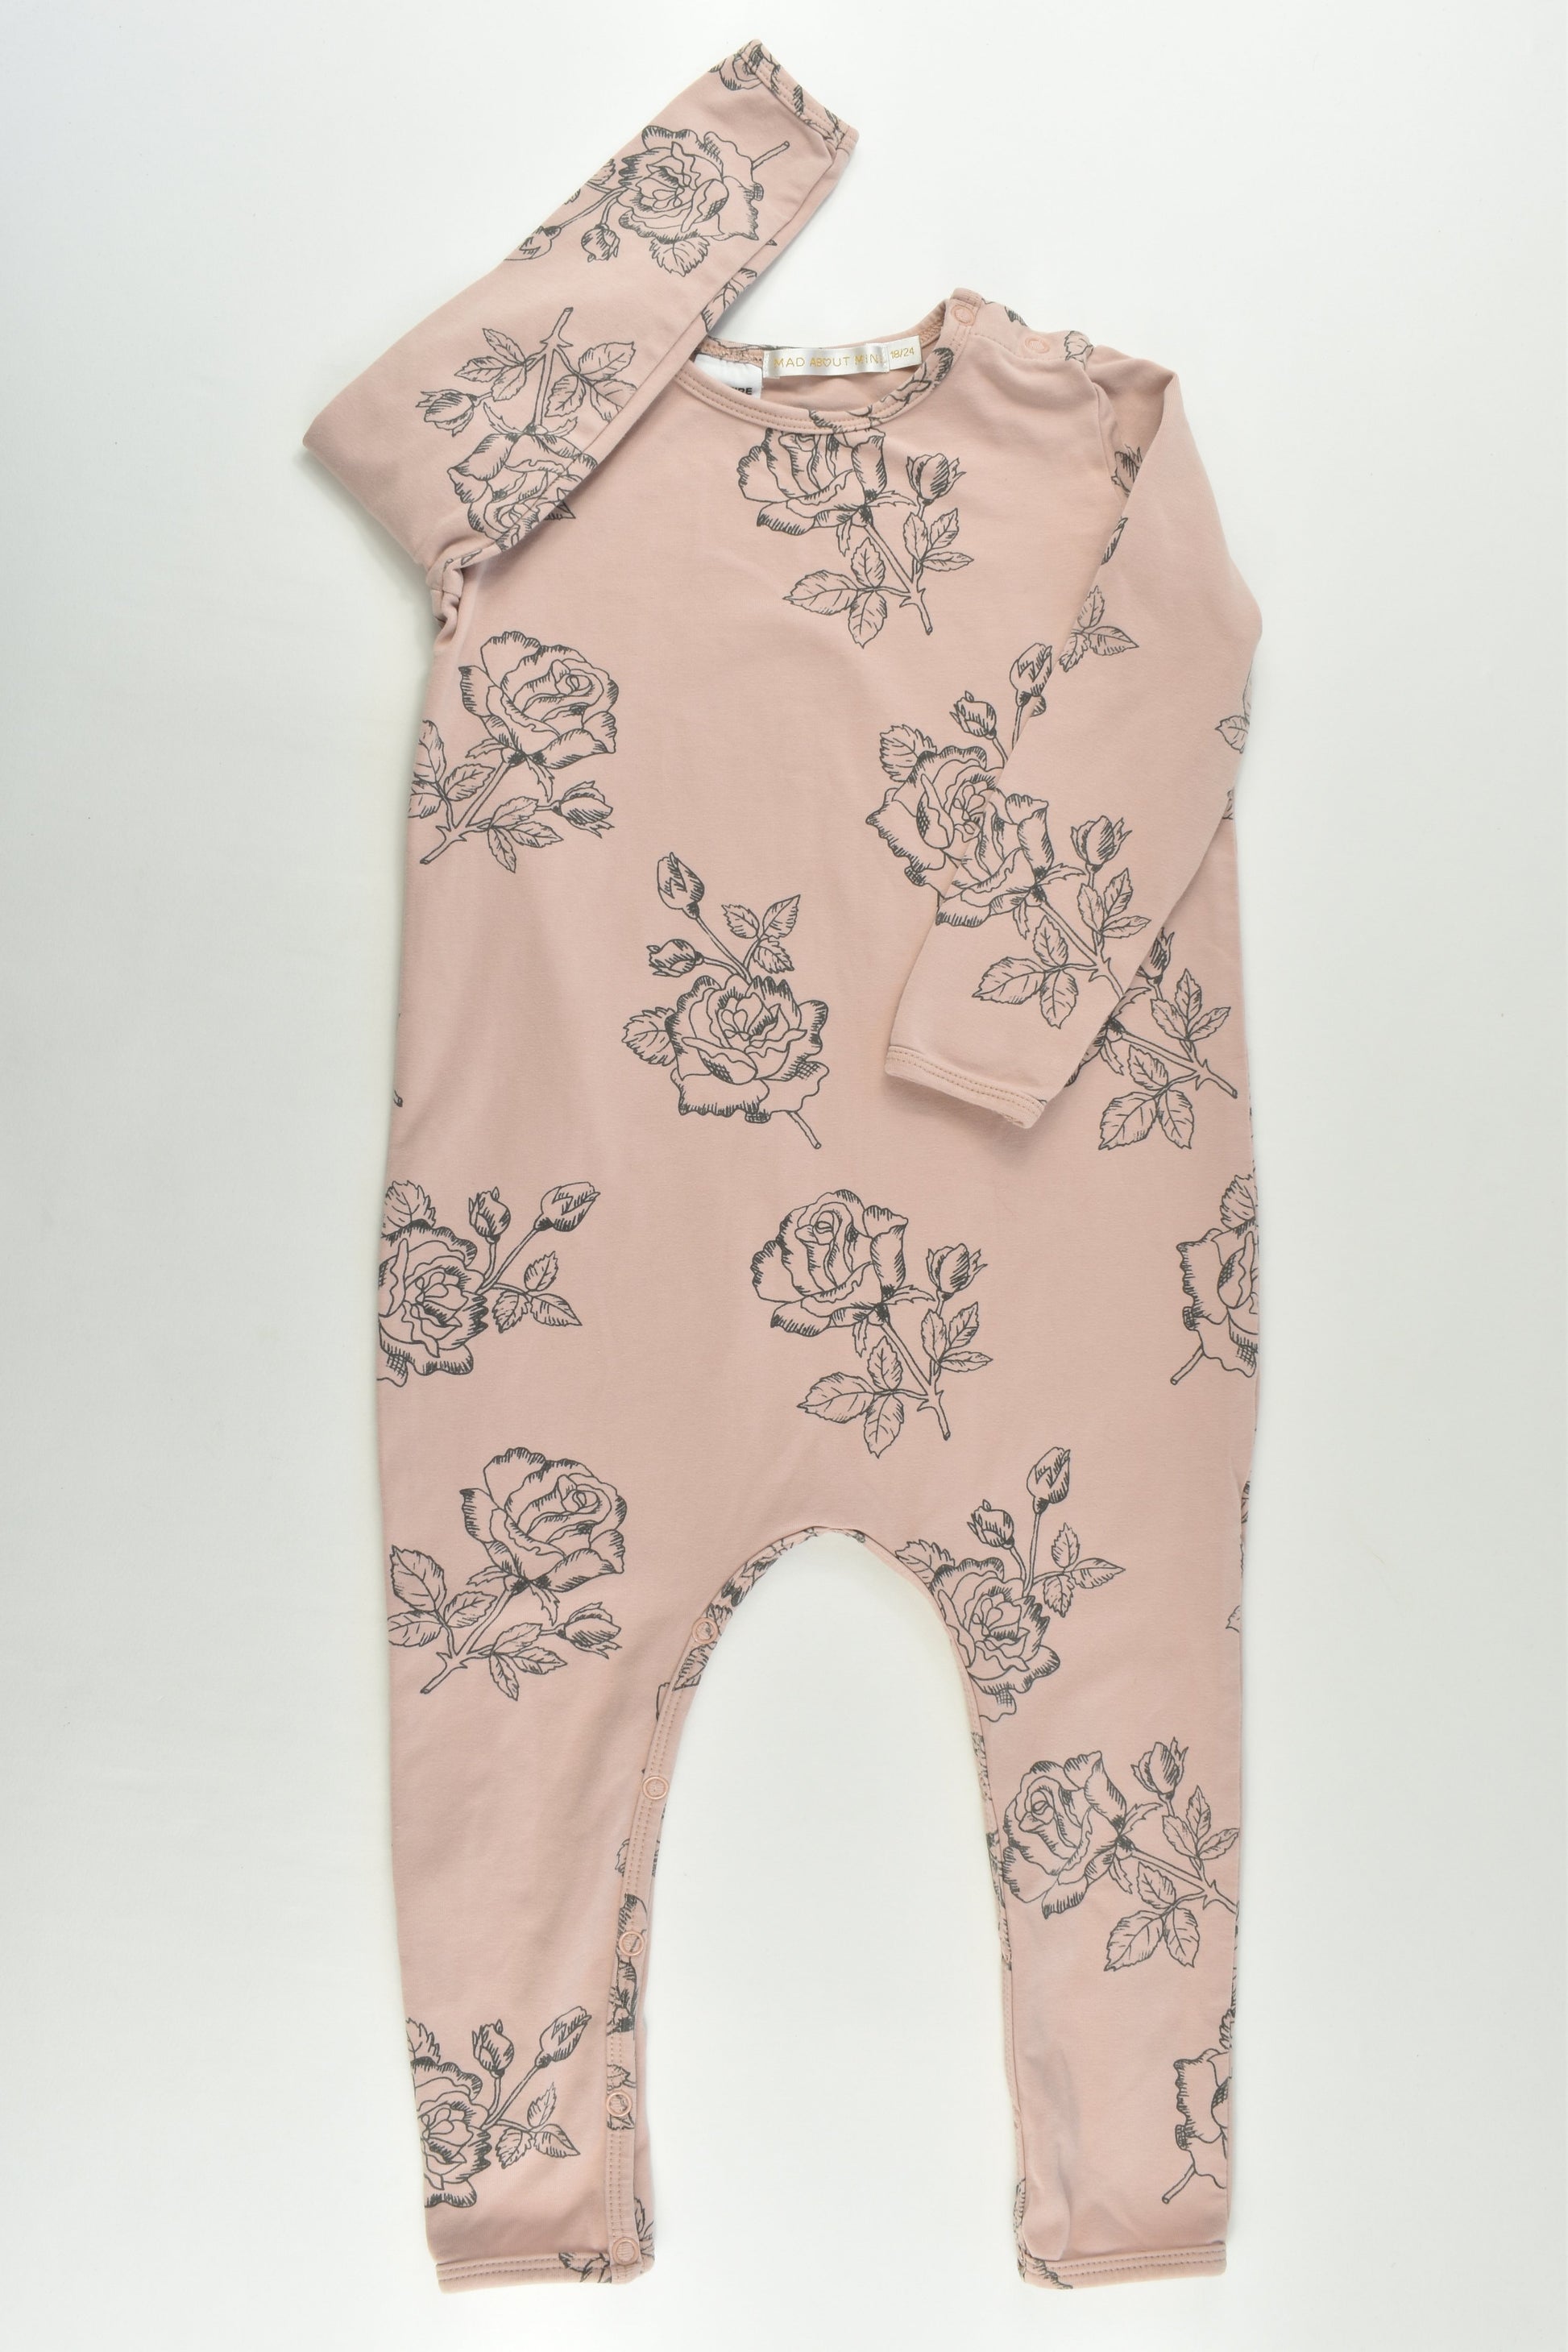 Mad About Mini (AU) Size 2 (18/24 months) Organic Rose Jumpsuit